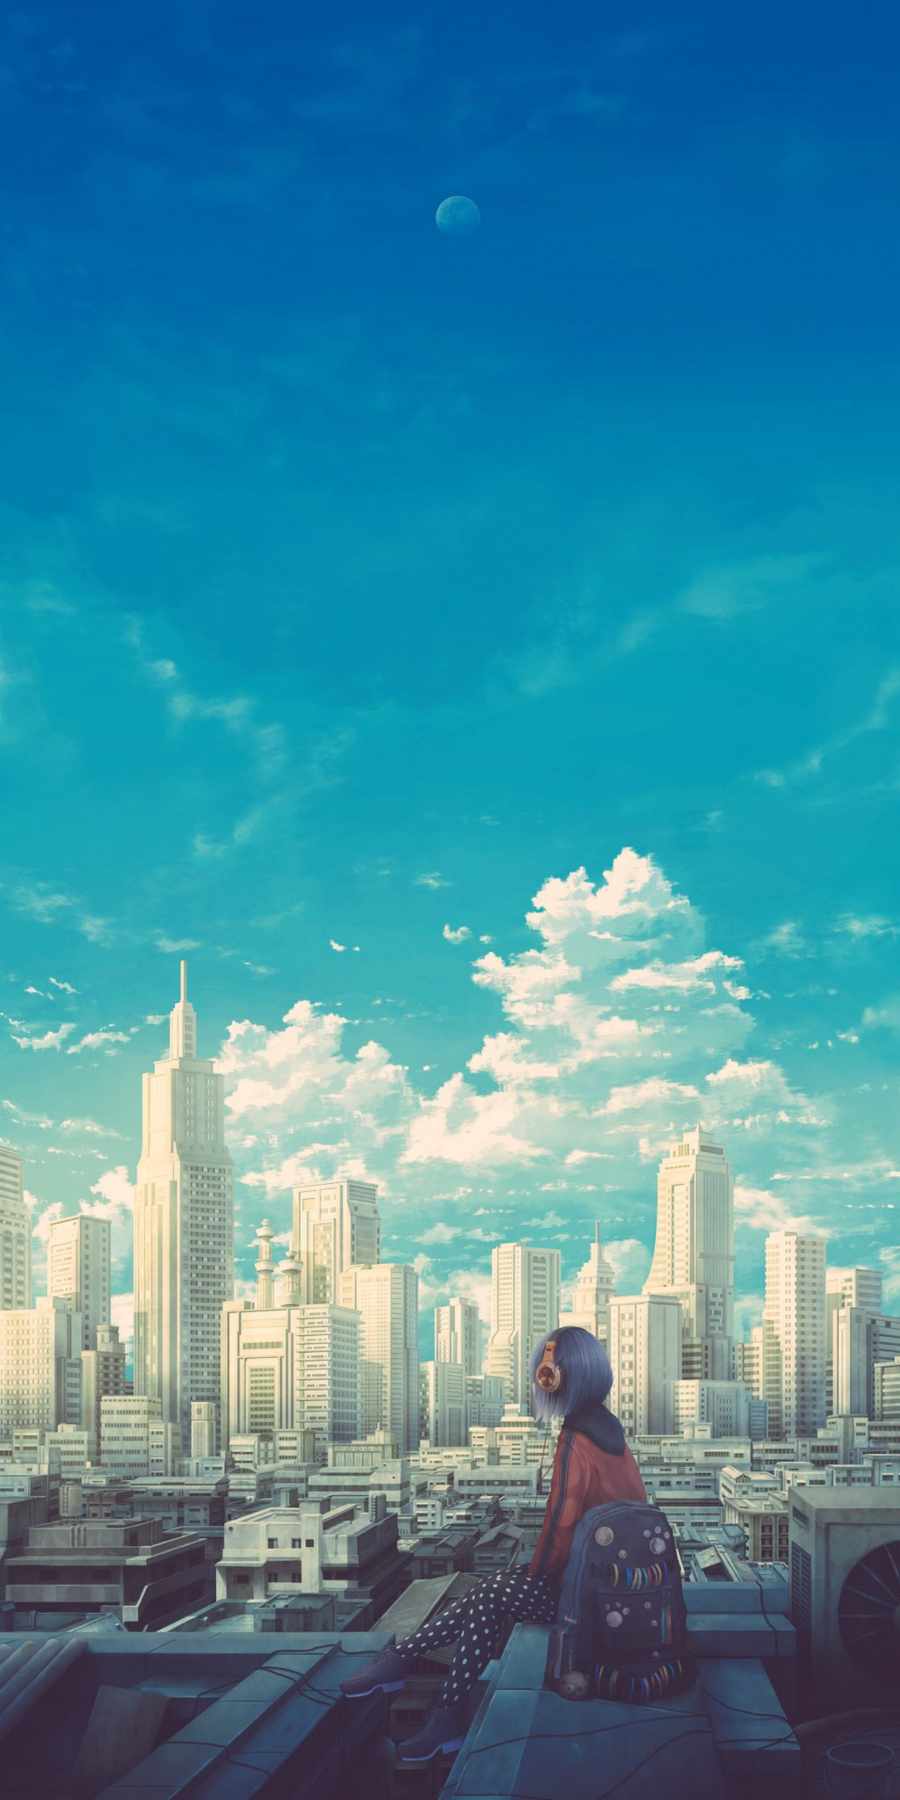 Cloudy Sky Anime 4K IPhone Wallpaper - IPhone Wallpapers : iPhone Wallpapers